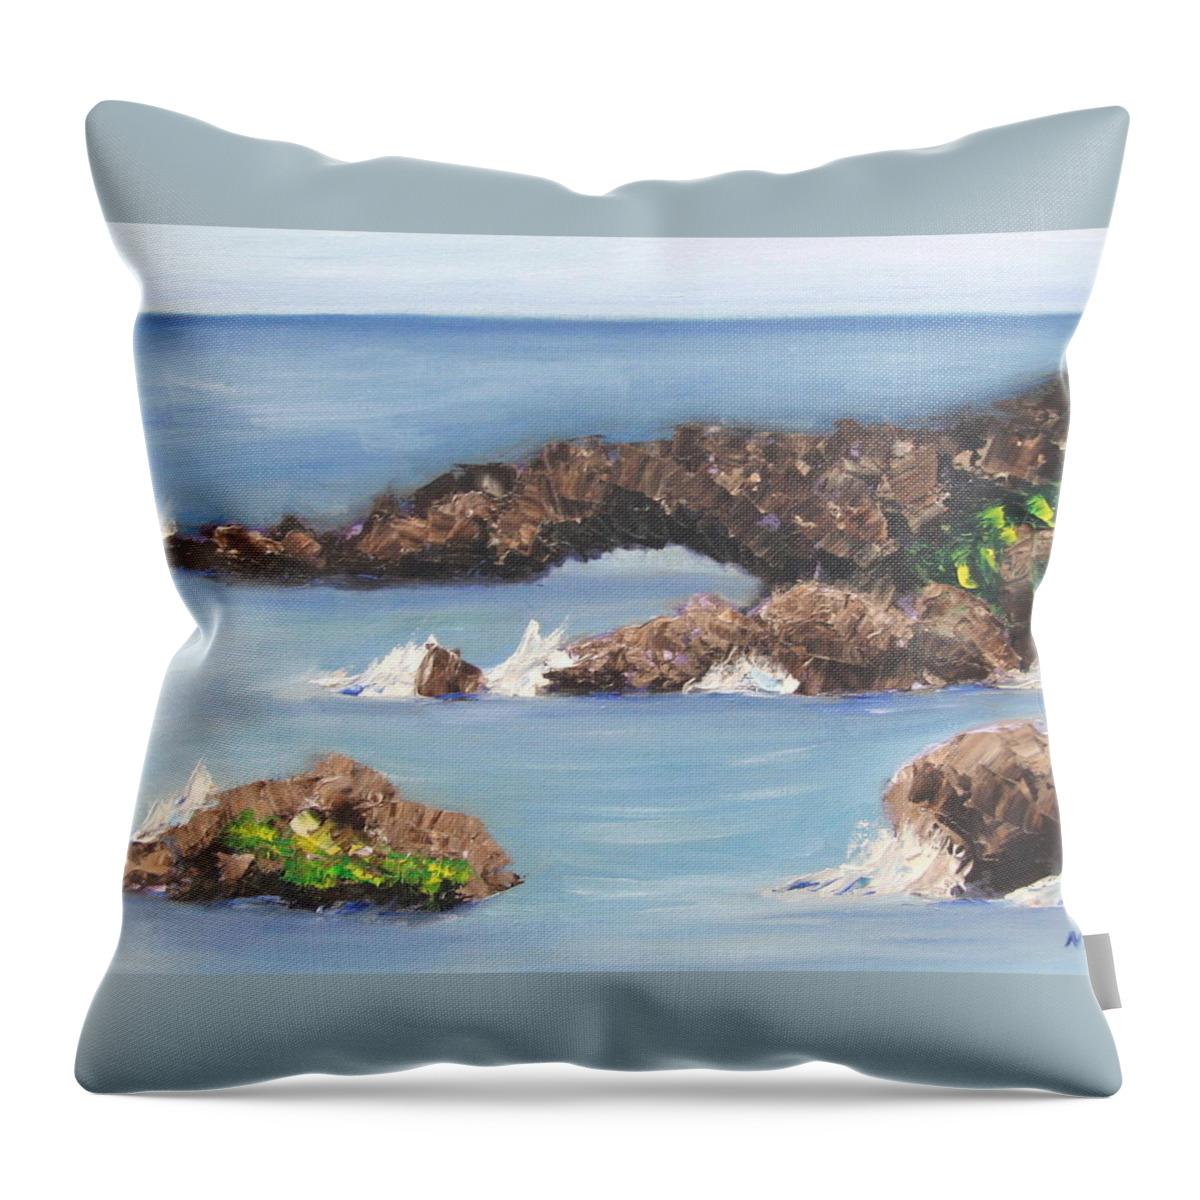 Maui Throw Pillow featuring the photograph Maui Rock Bridge by Natalie Rotman Cote